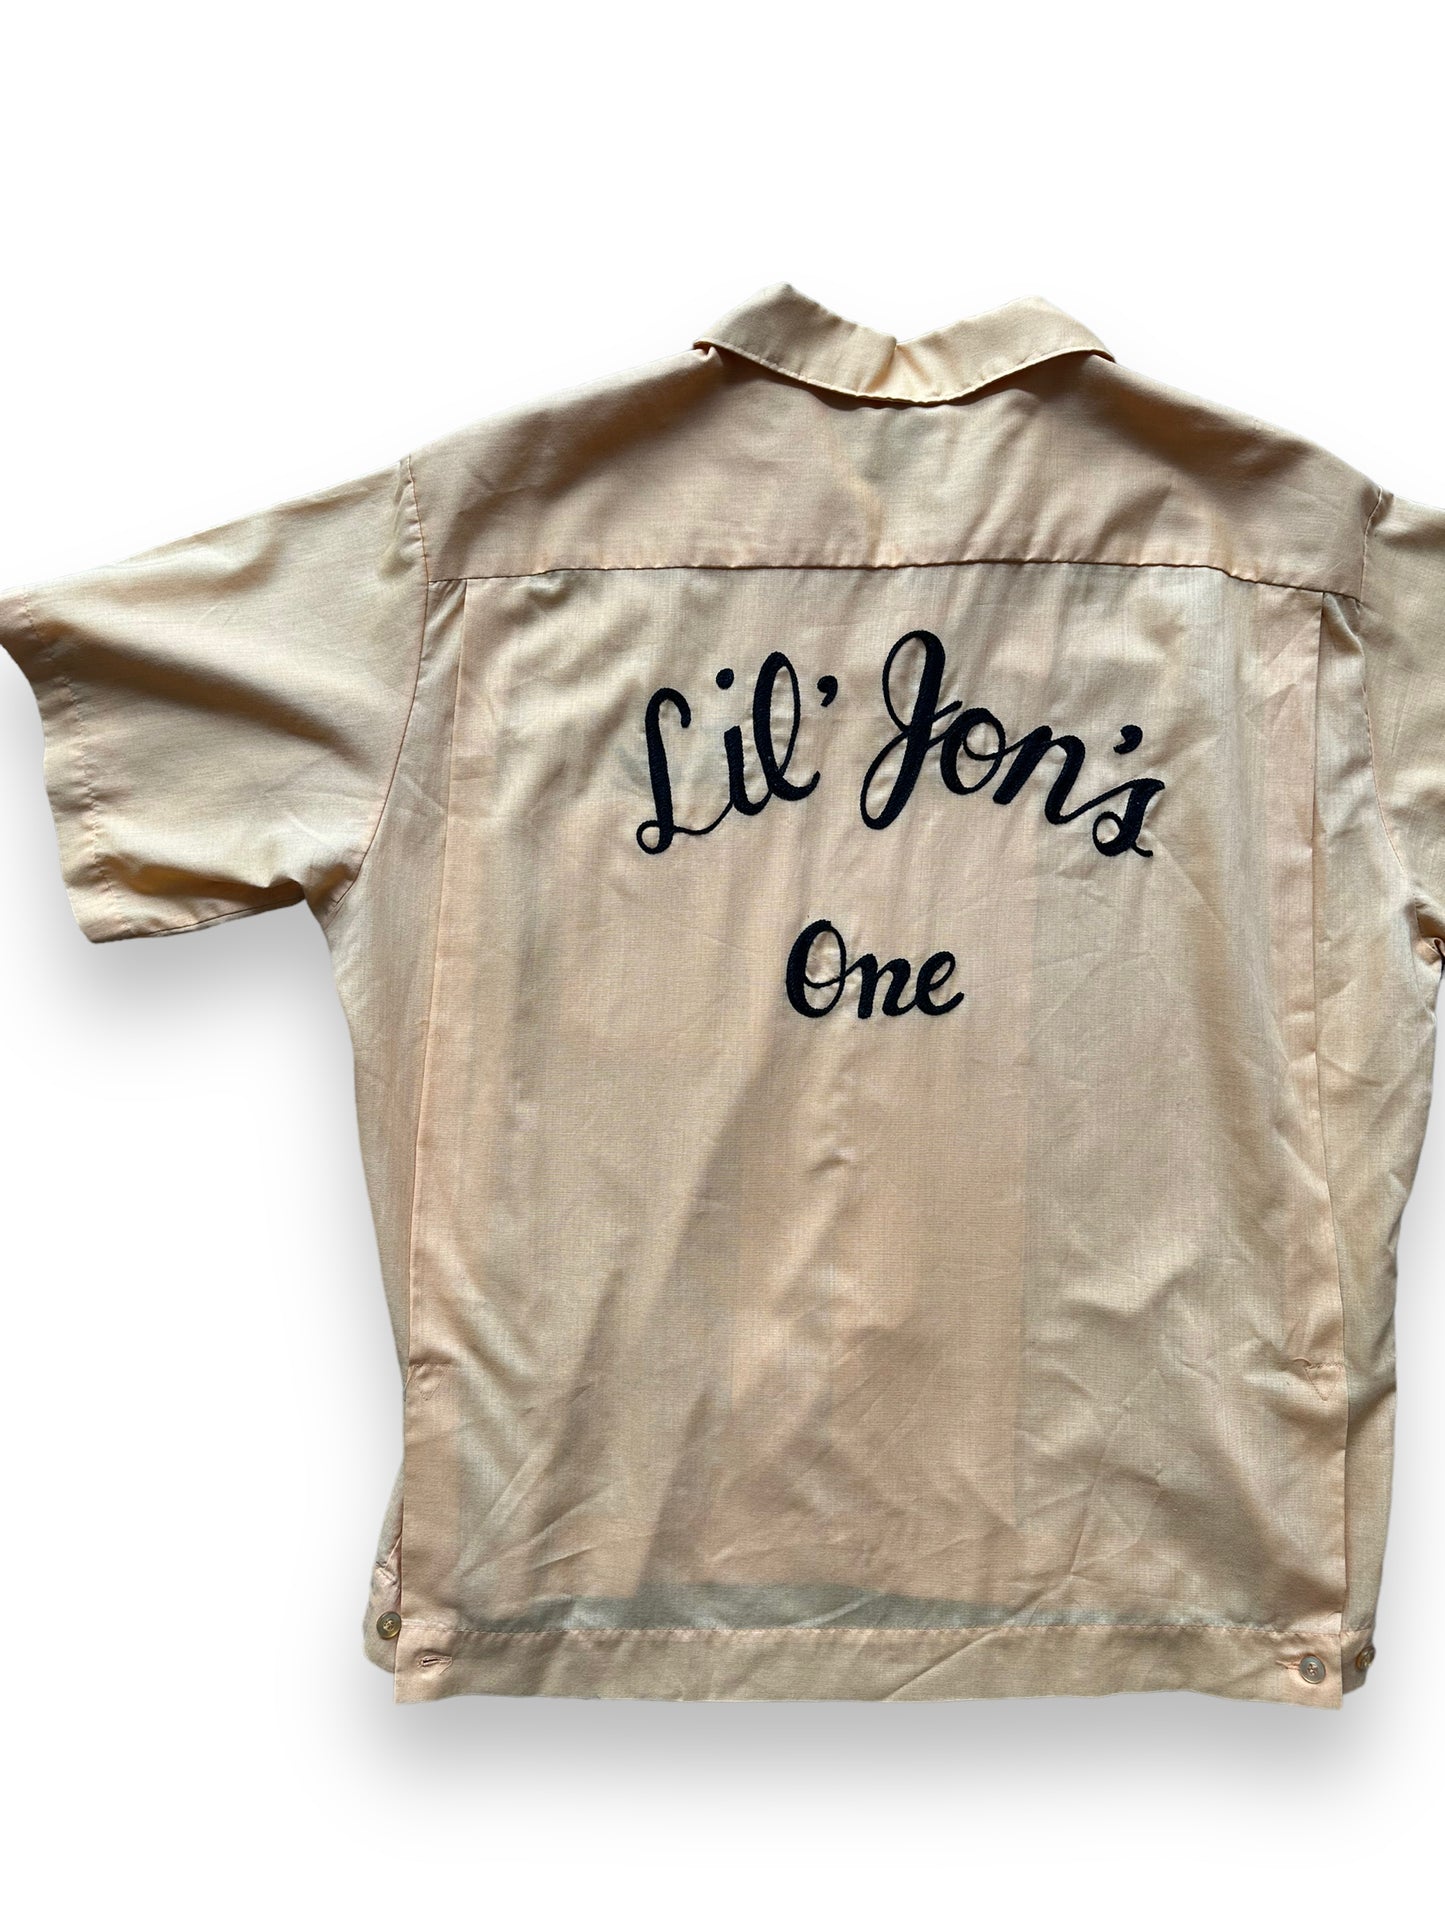 Back left of Vintage "Lil' Jon's One" Chainstitched Bowling Shirt SZ L | Vintage Bowling Shirt Seattle | Barn Owl Vintage Seattle